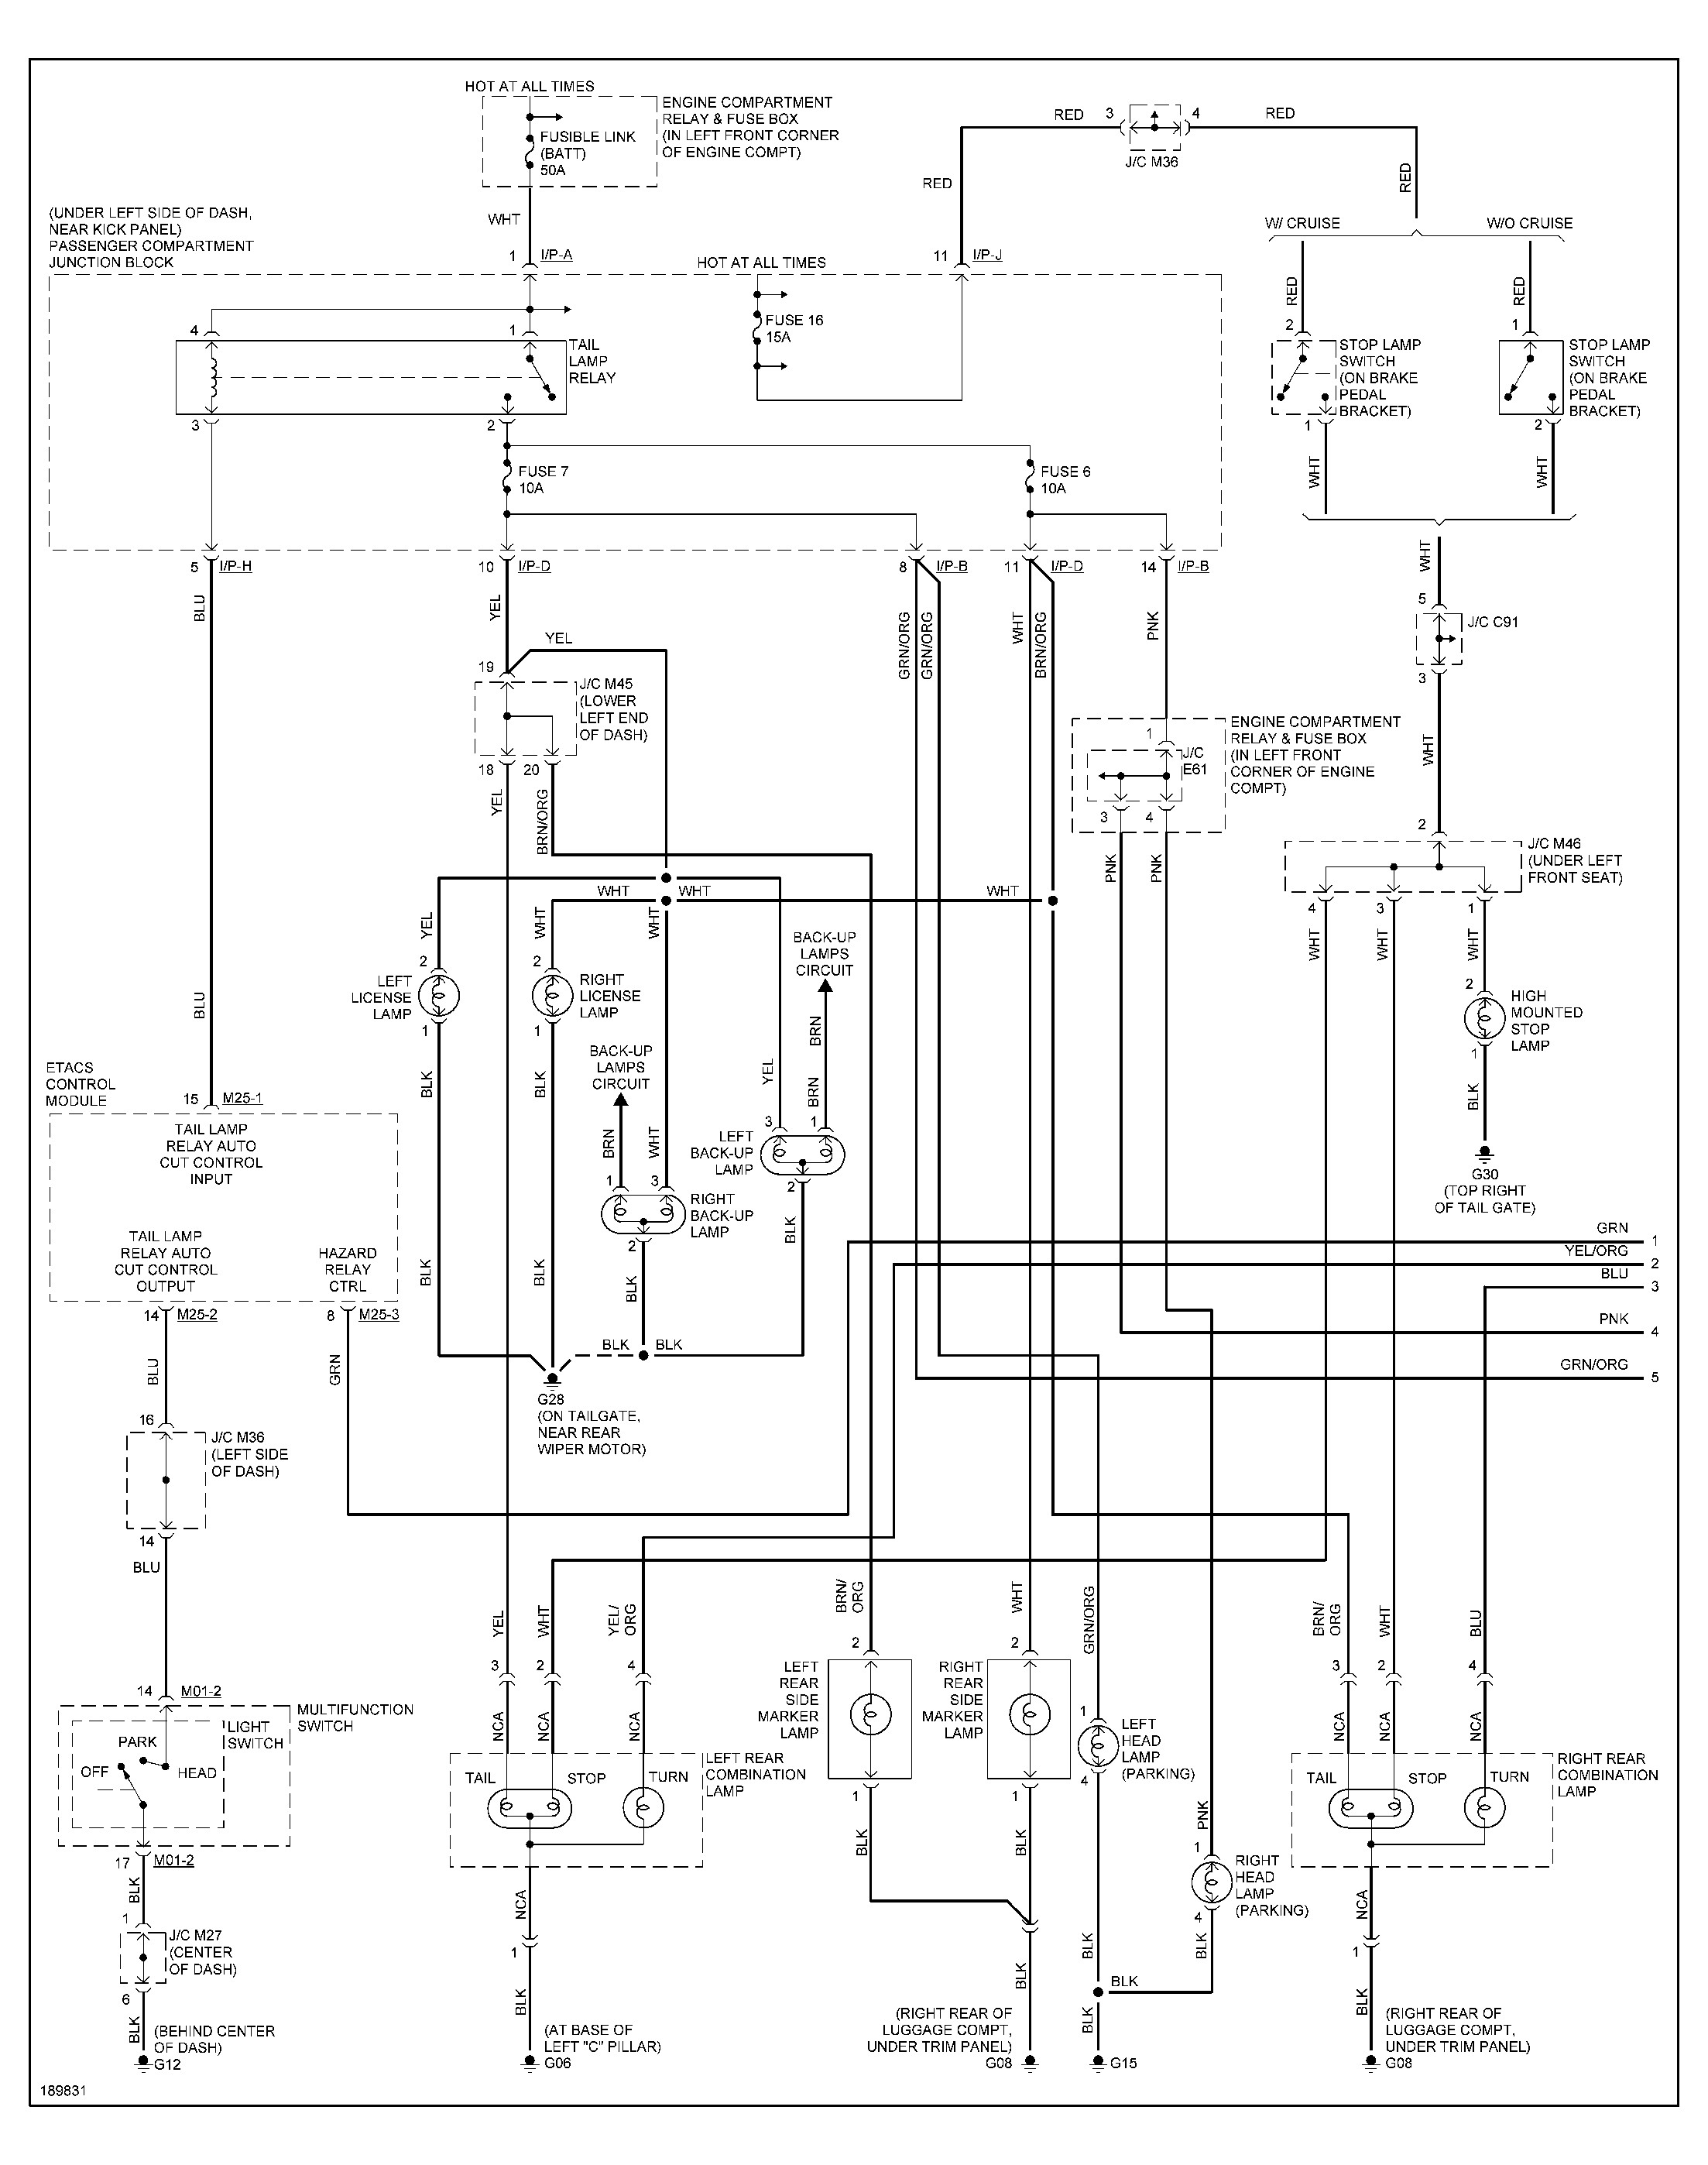 2005 Hyundai Tucson Engine Diagram Hyundai Wiring Diagrams Wiring Diagram Used Of 2005 Hyundai Tucson Engine Diagram